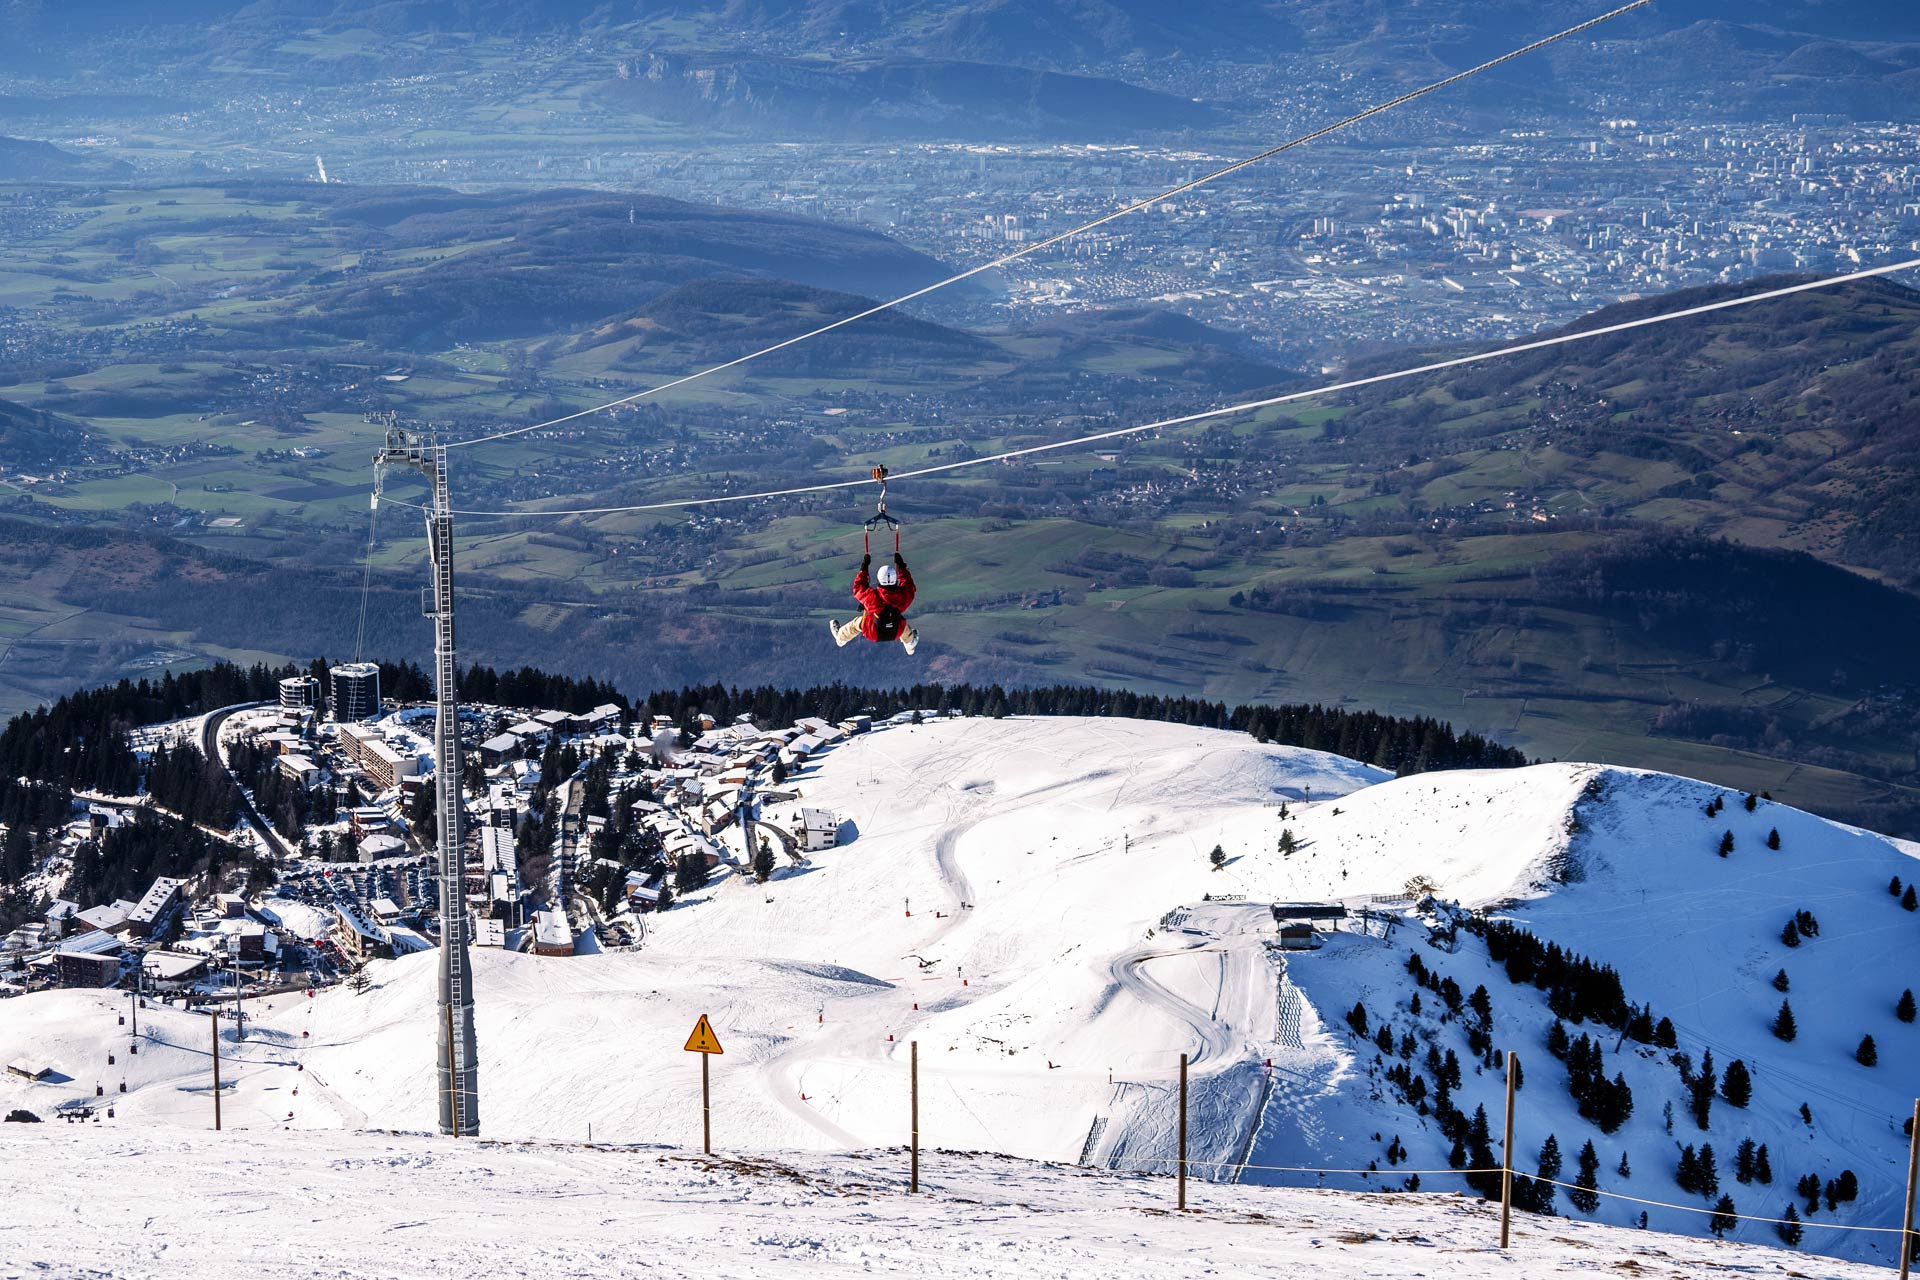 Chamrousse plus grande tyrolienne à pylones france europe monde adrenaline park sommet hiver station ski montagne grenoble isère alpes france - © CH - OT Chamrousse